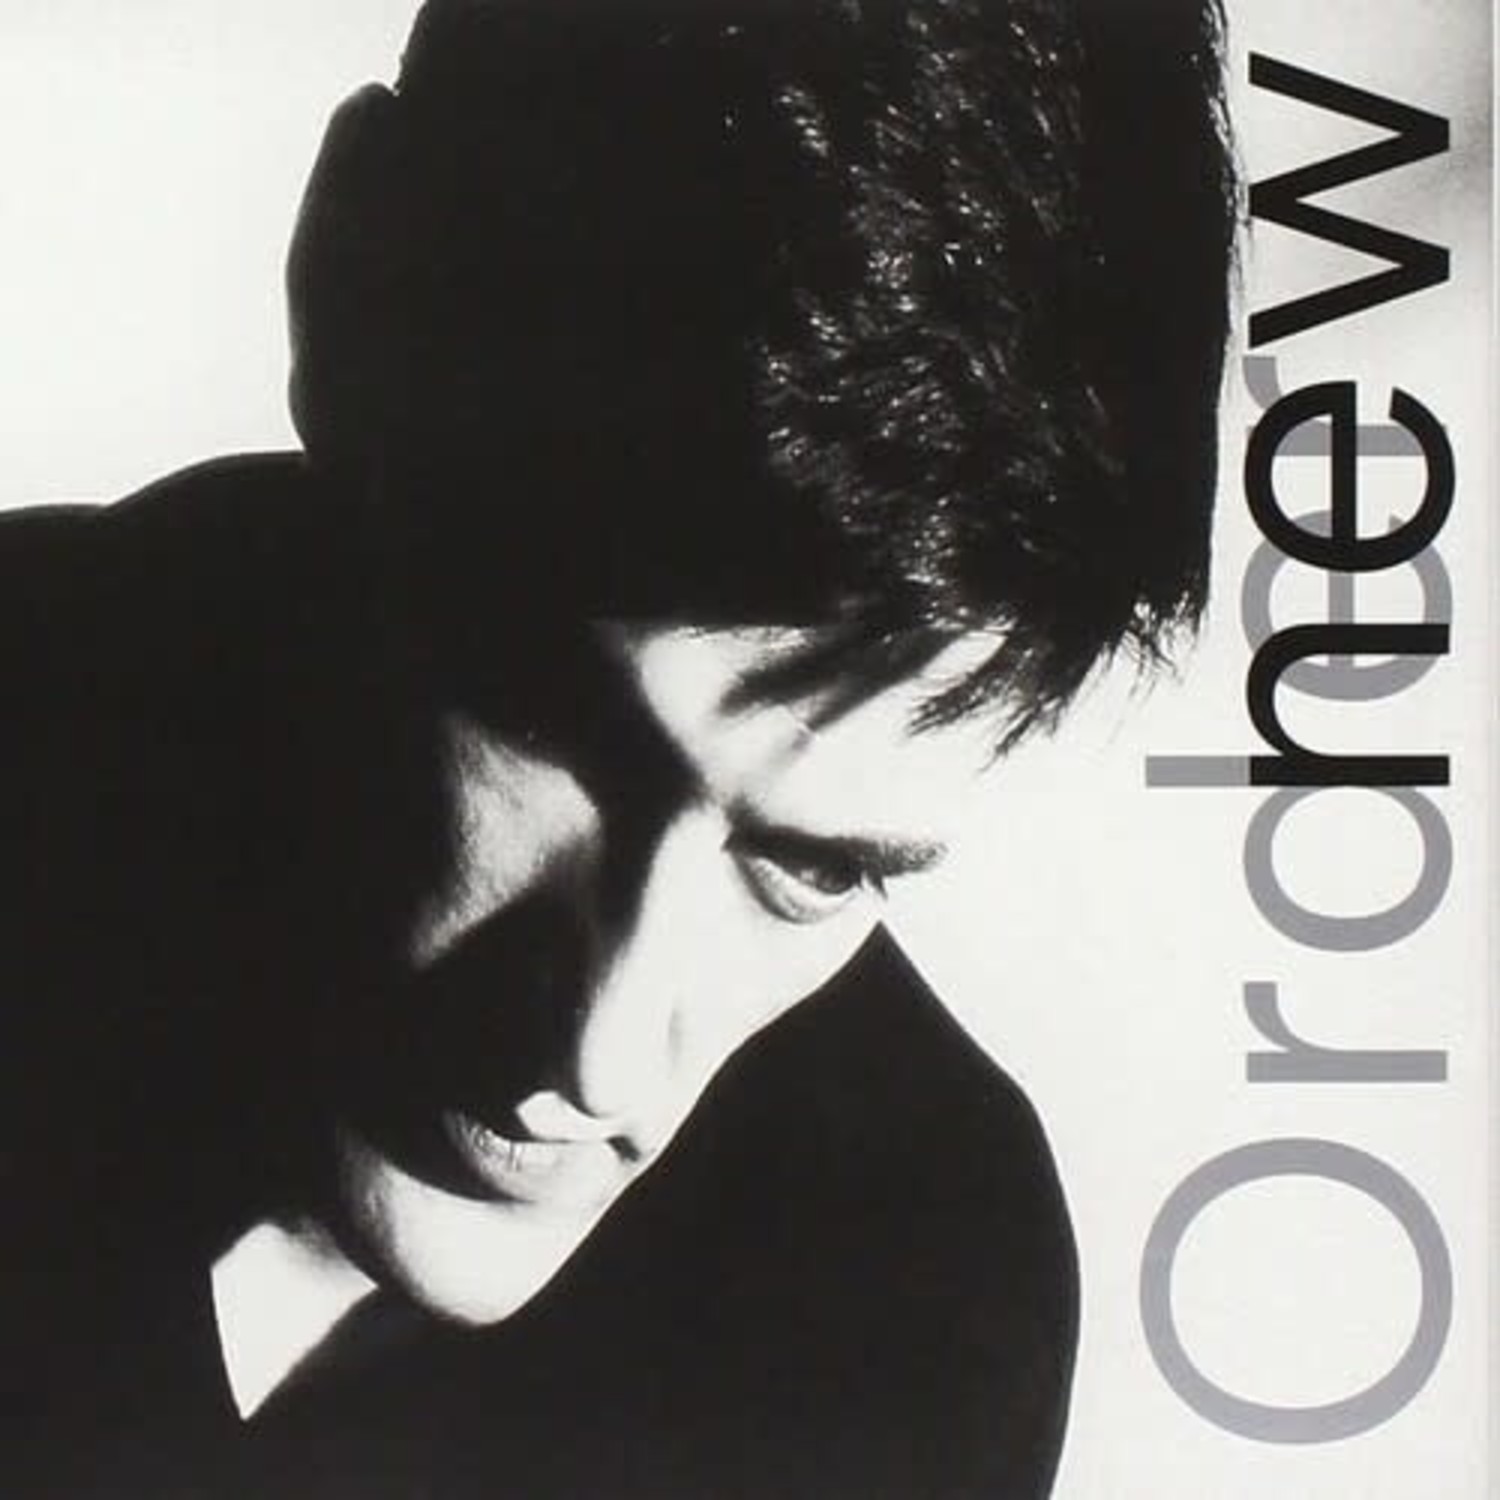 New Order - Low-Life [Import] LP - Wax Trax Records